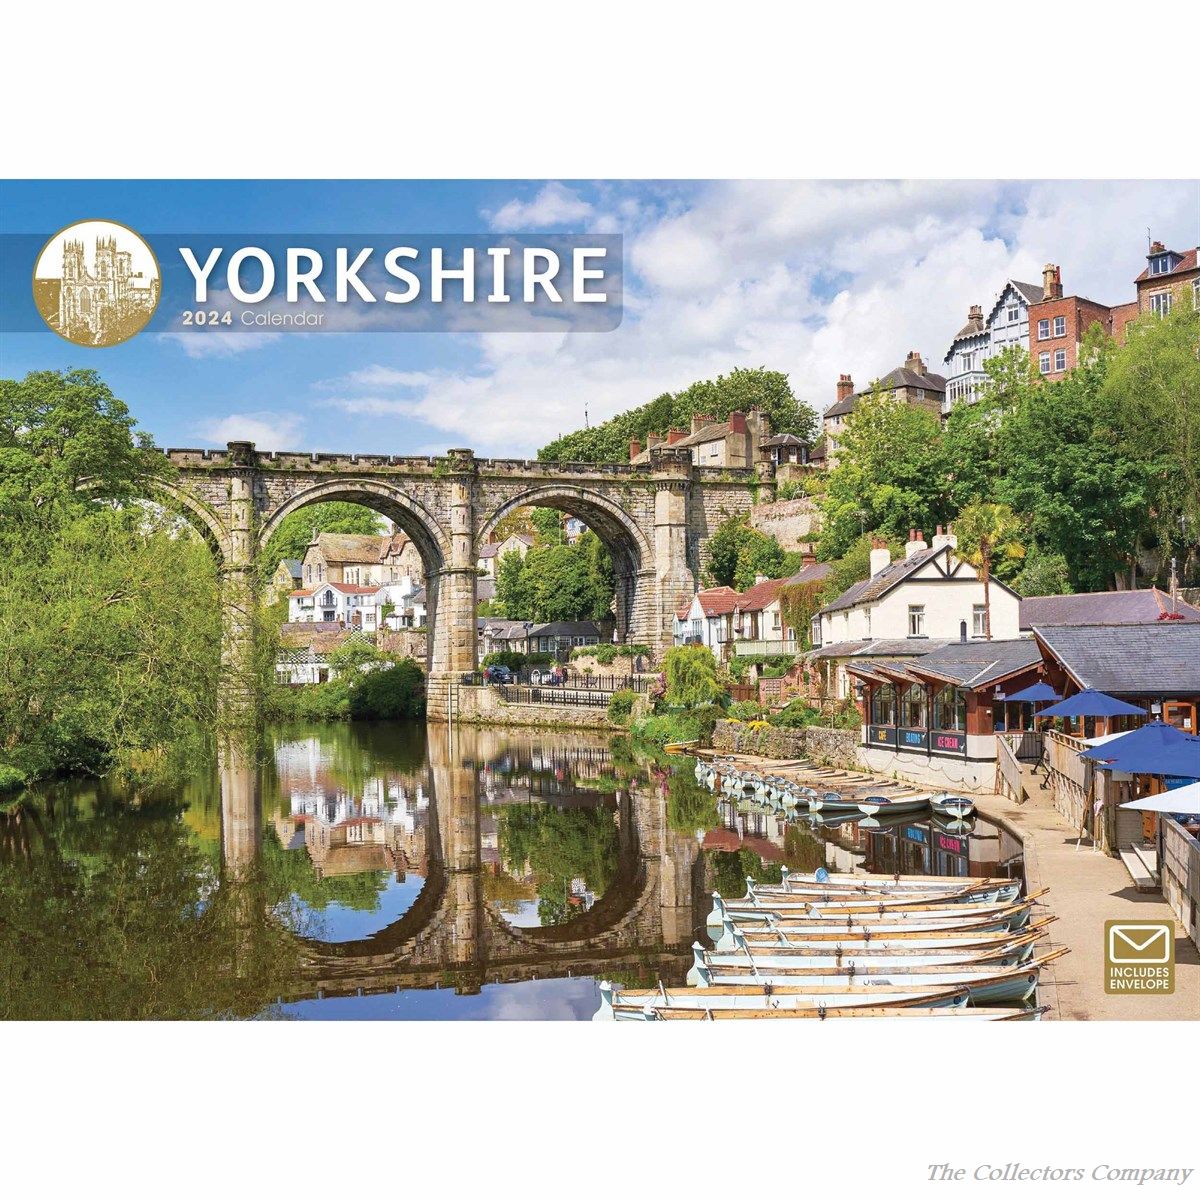 Yorkshire A4 Calendar 2024 by Carousel Calendars 240050